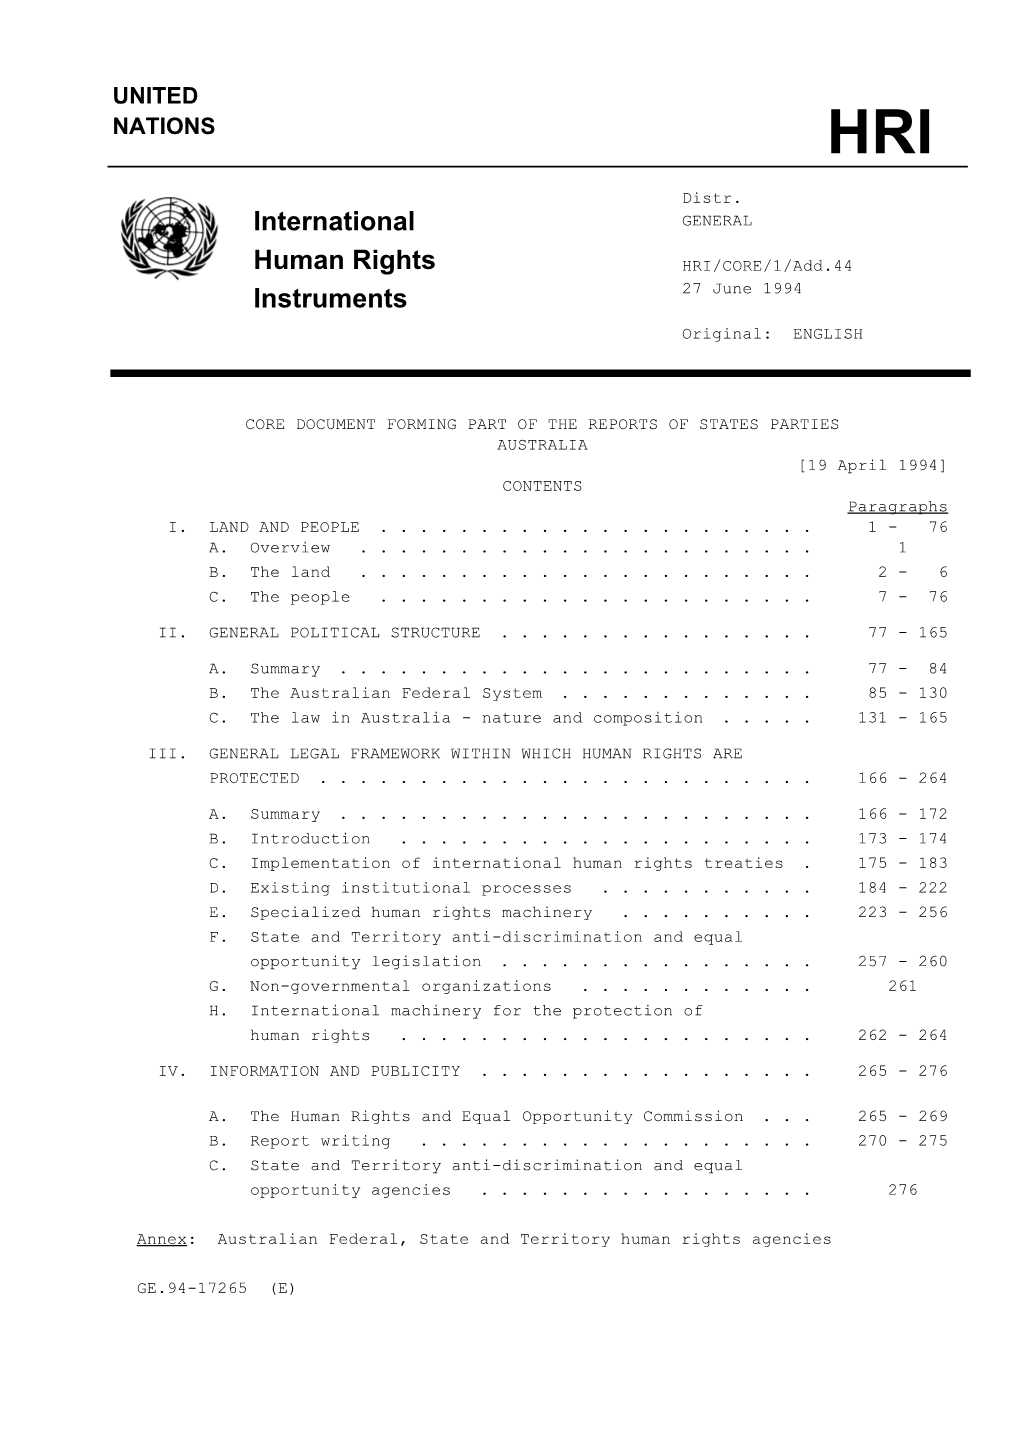 International Human Rights Instruments